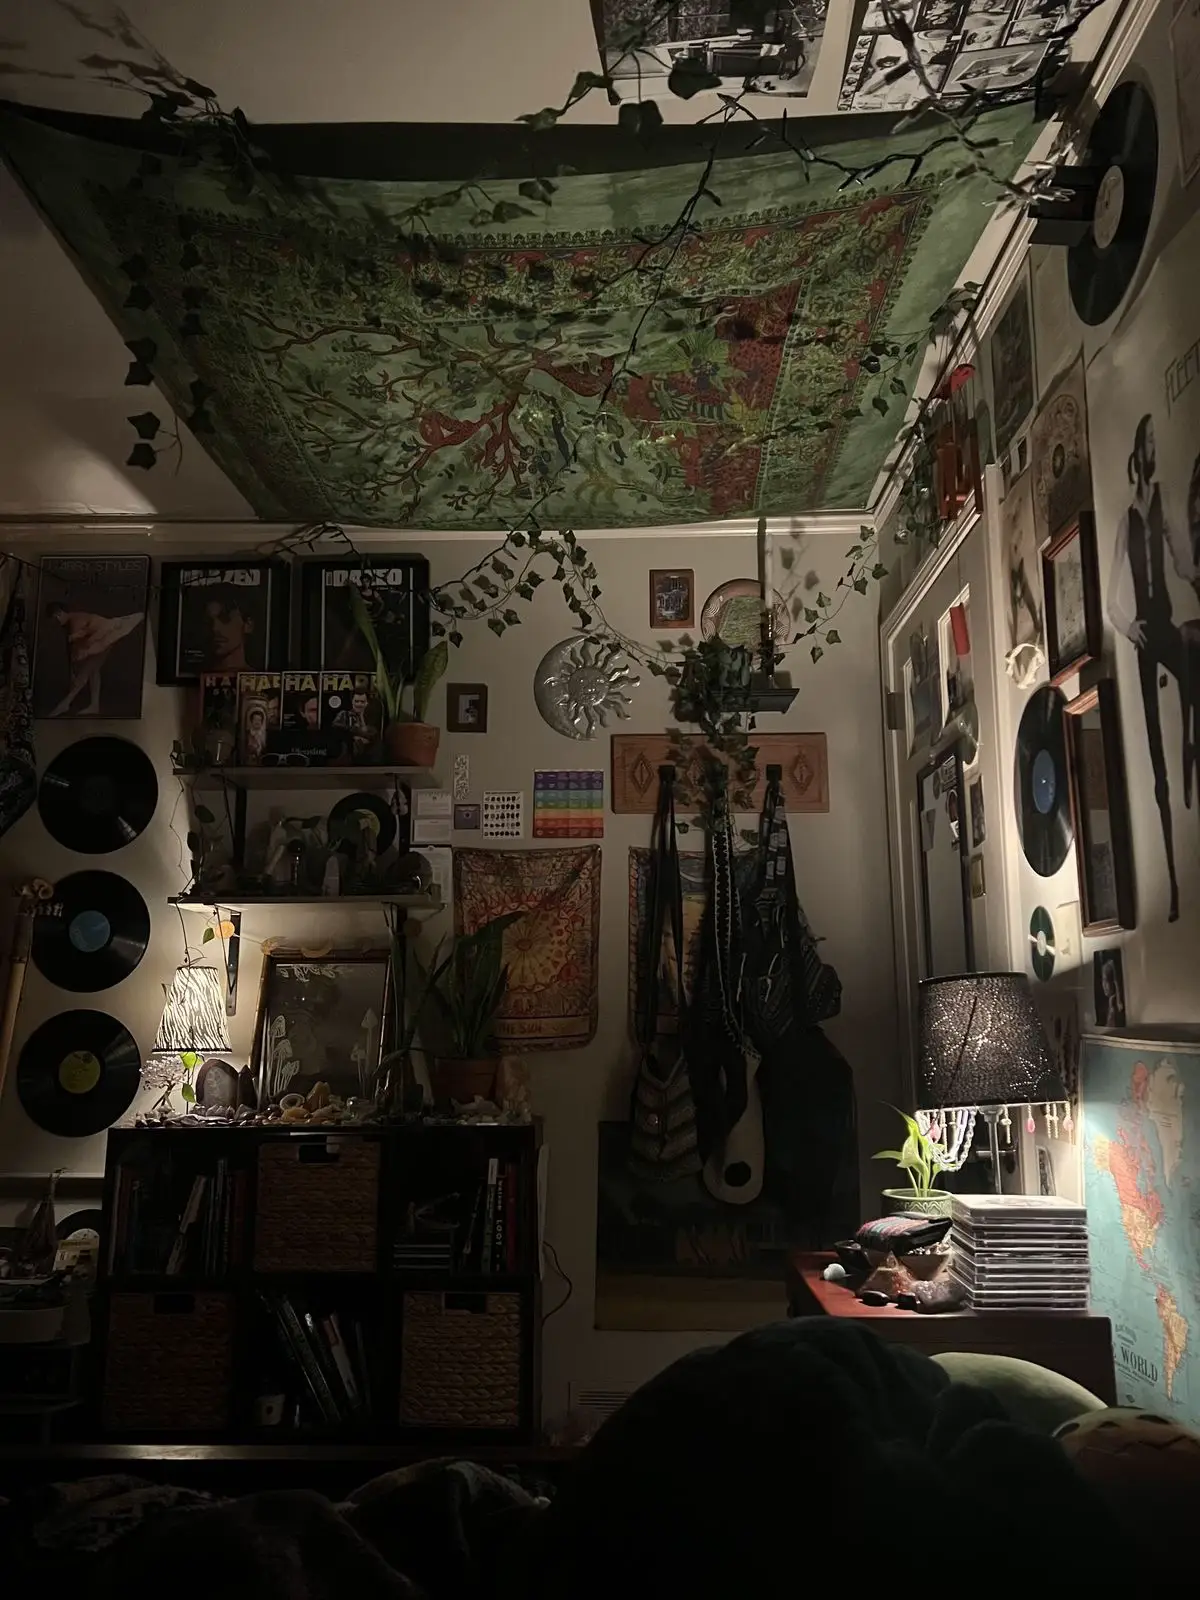 Grunge room decor - Lemon8 Search